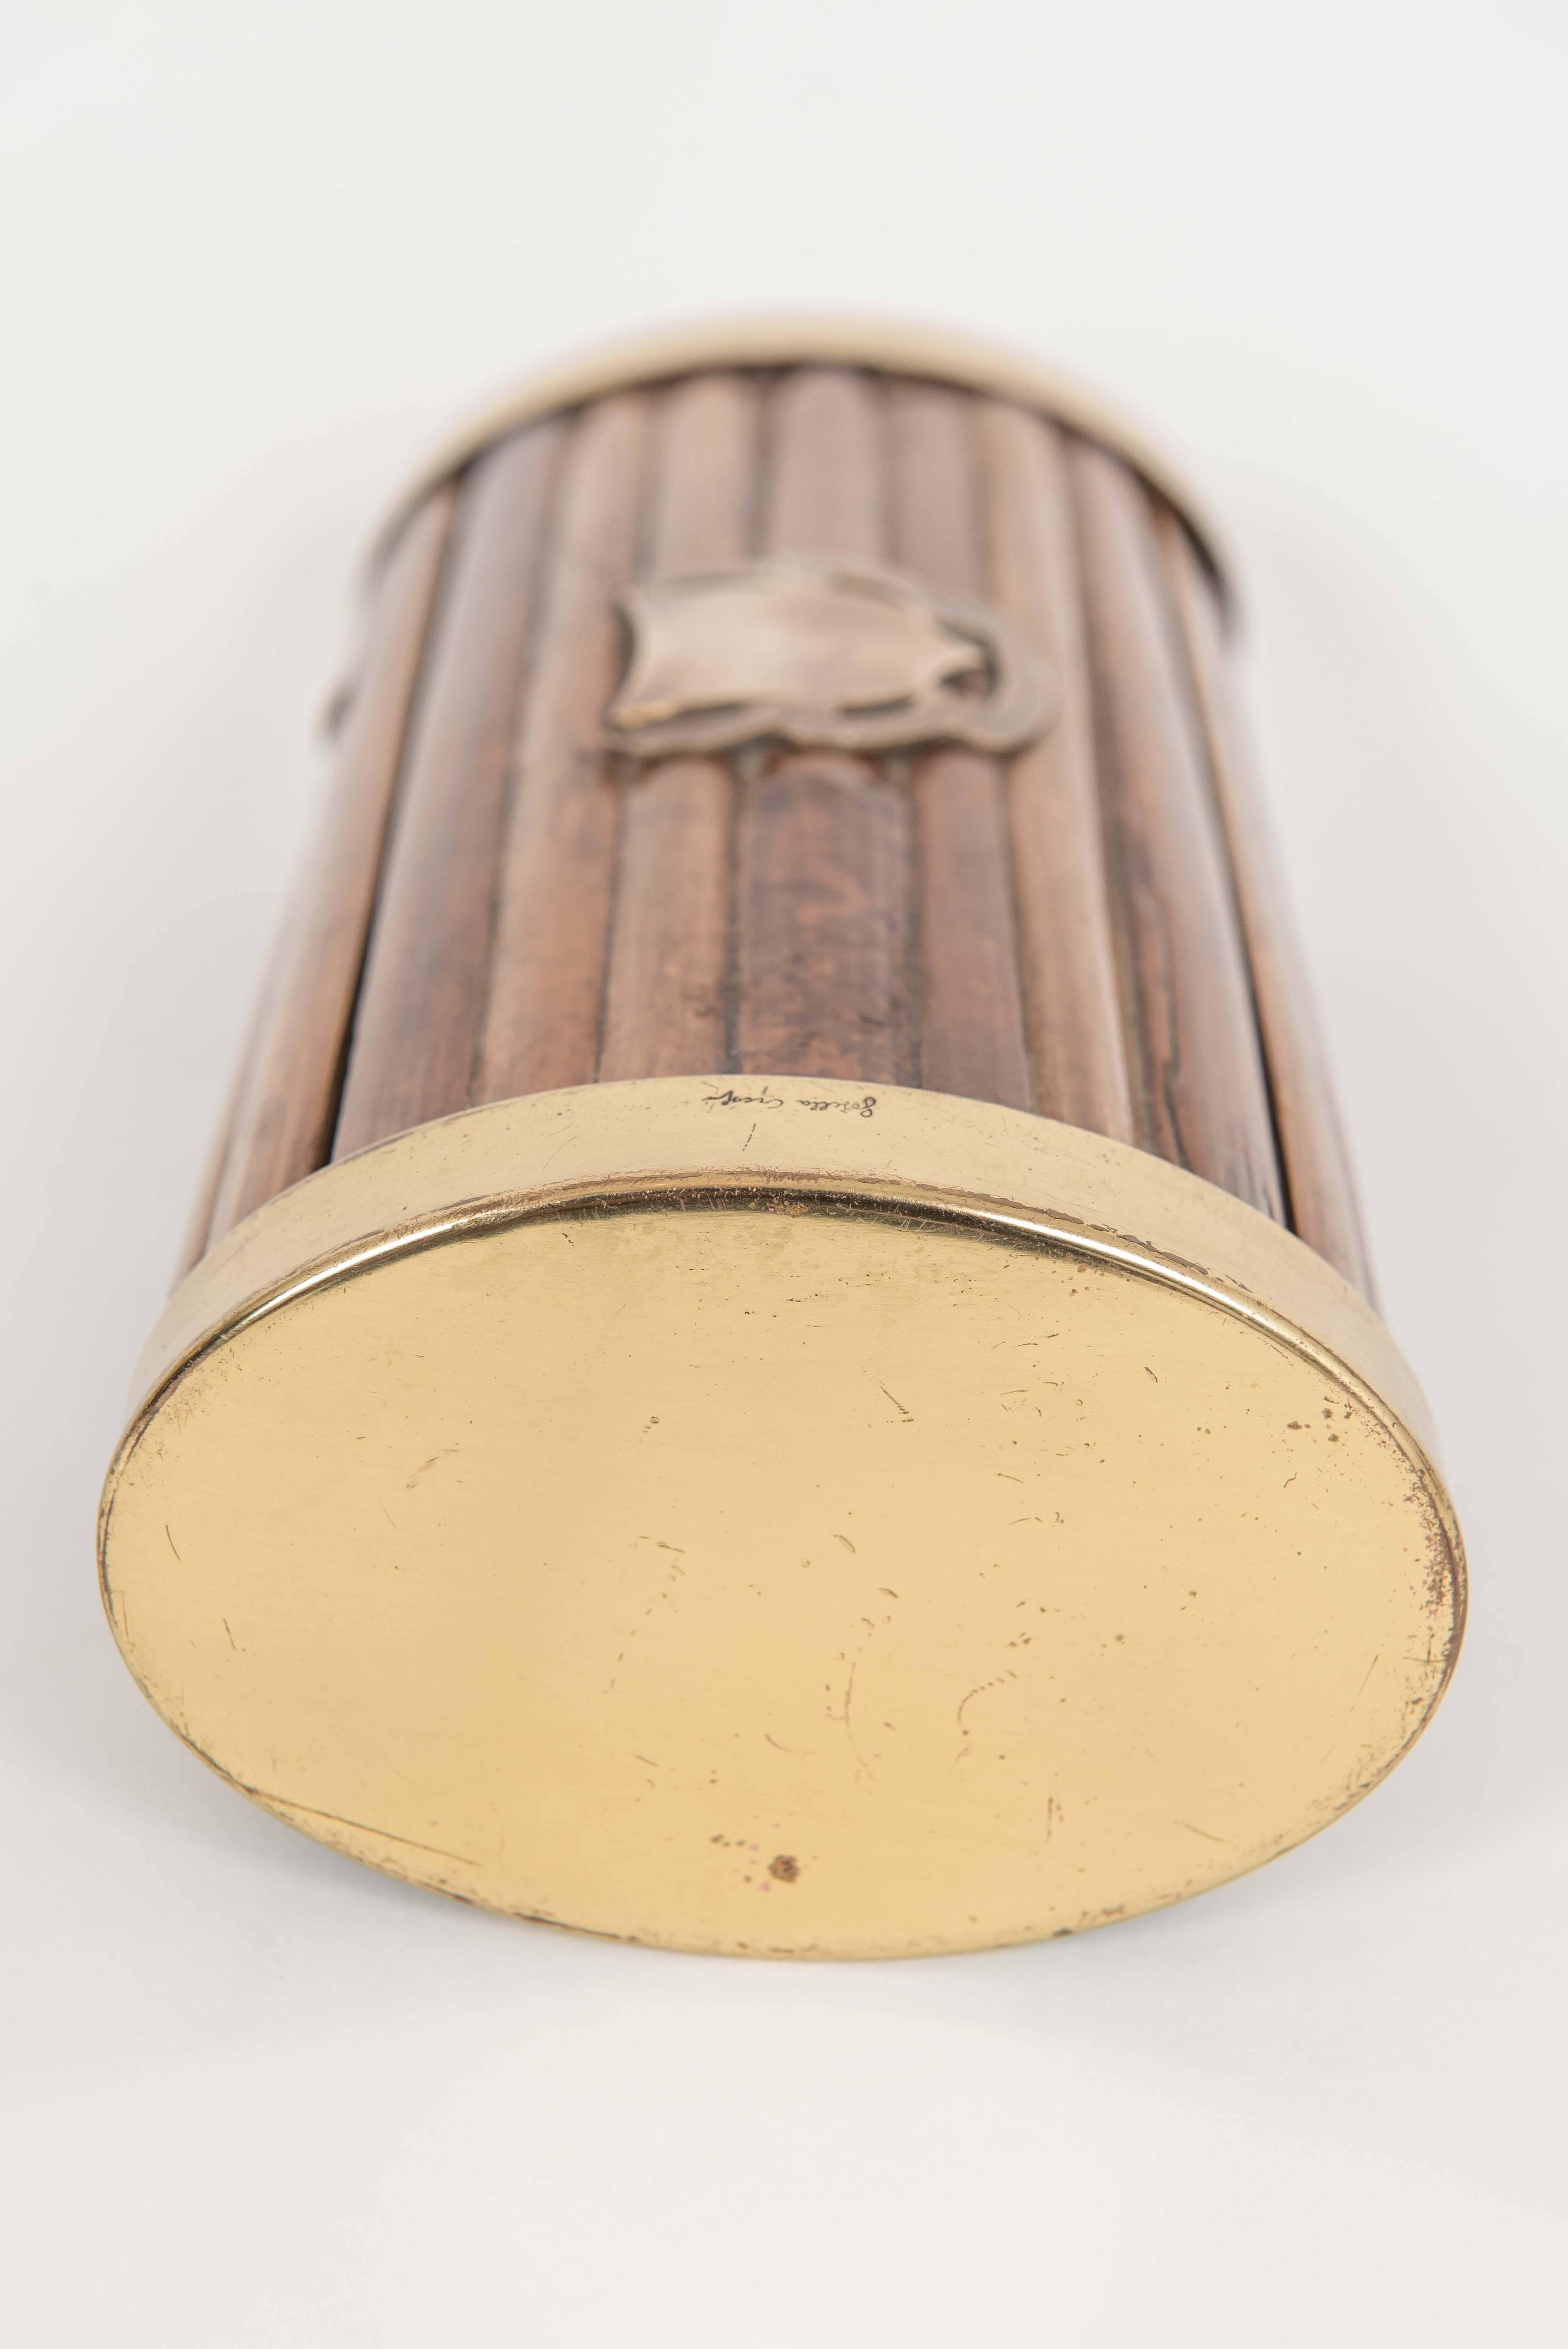 Modern Gabriella Crespi Brass and Bamboo Box